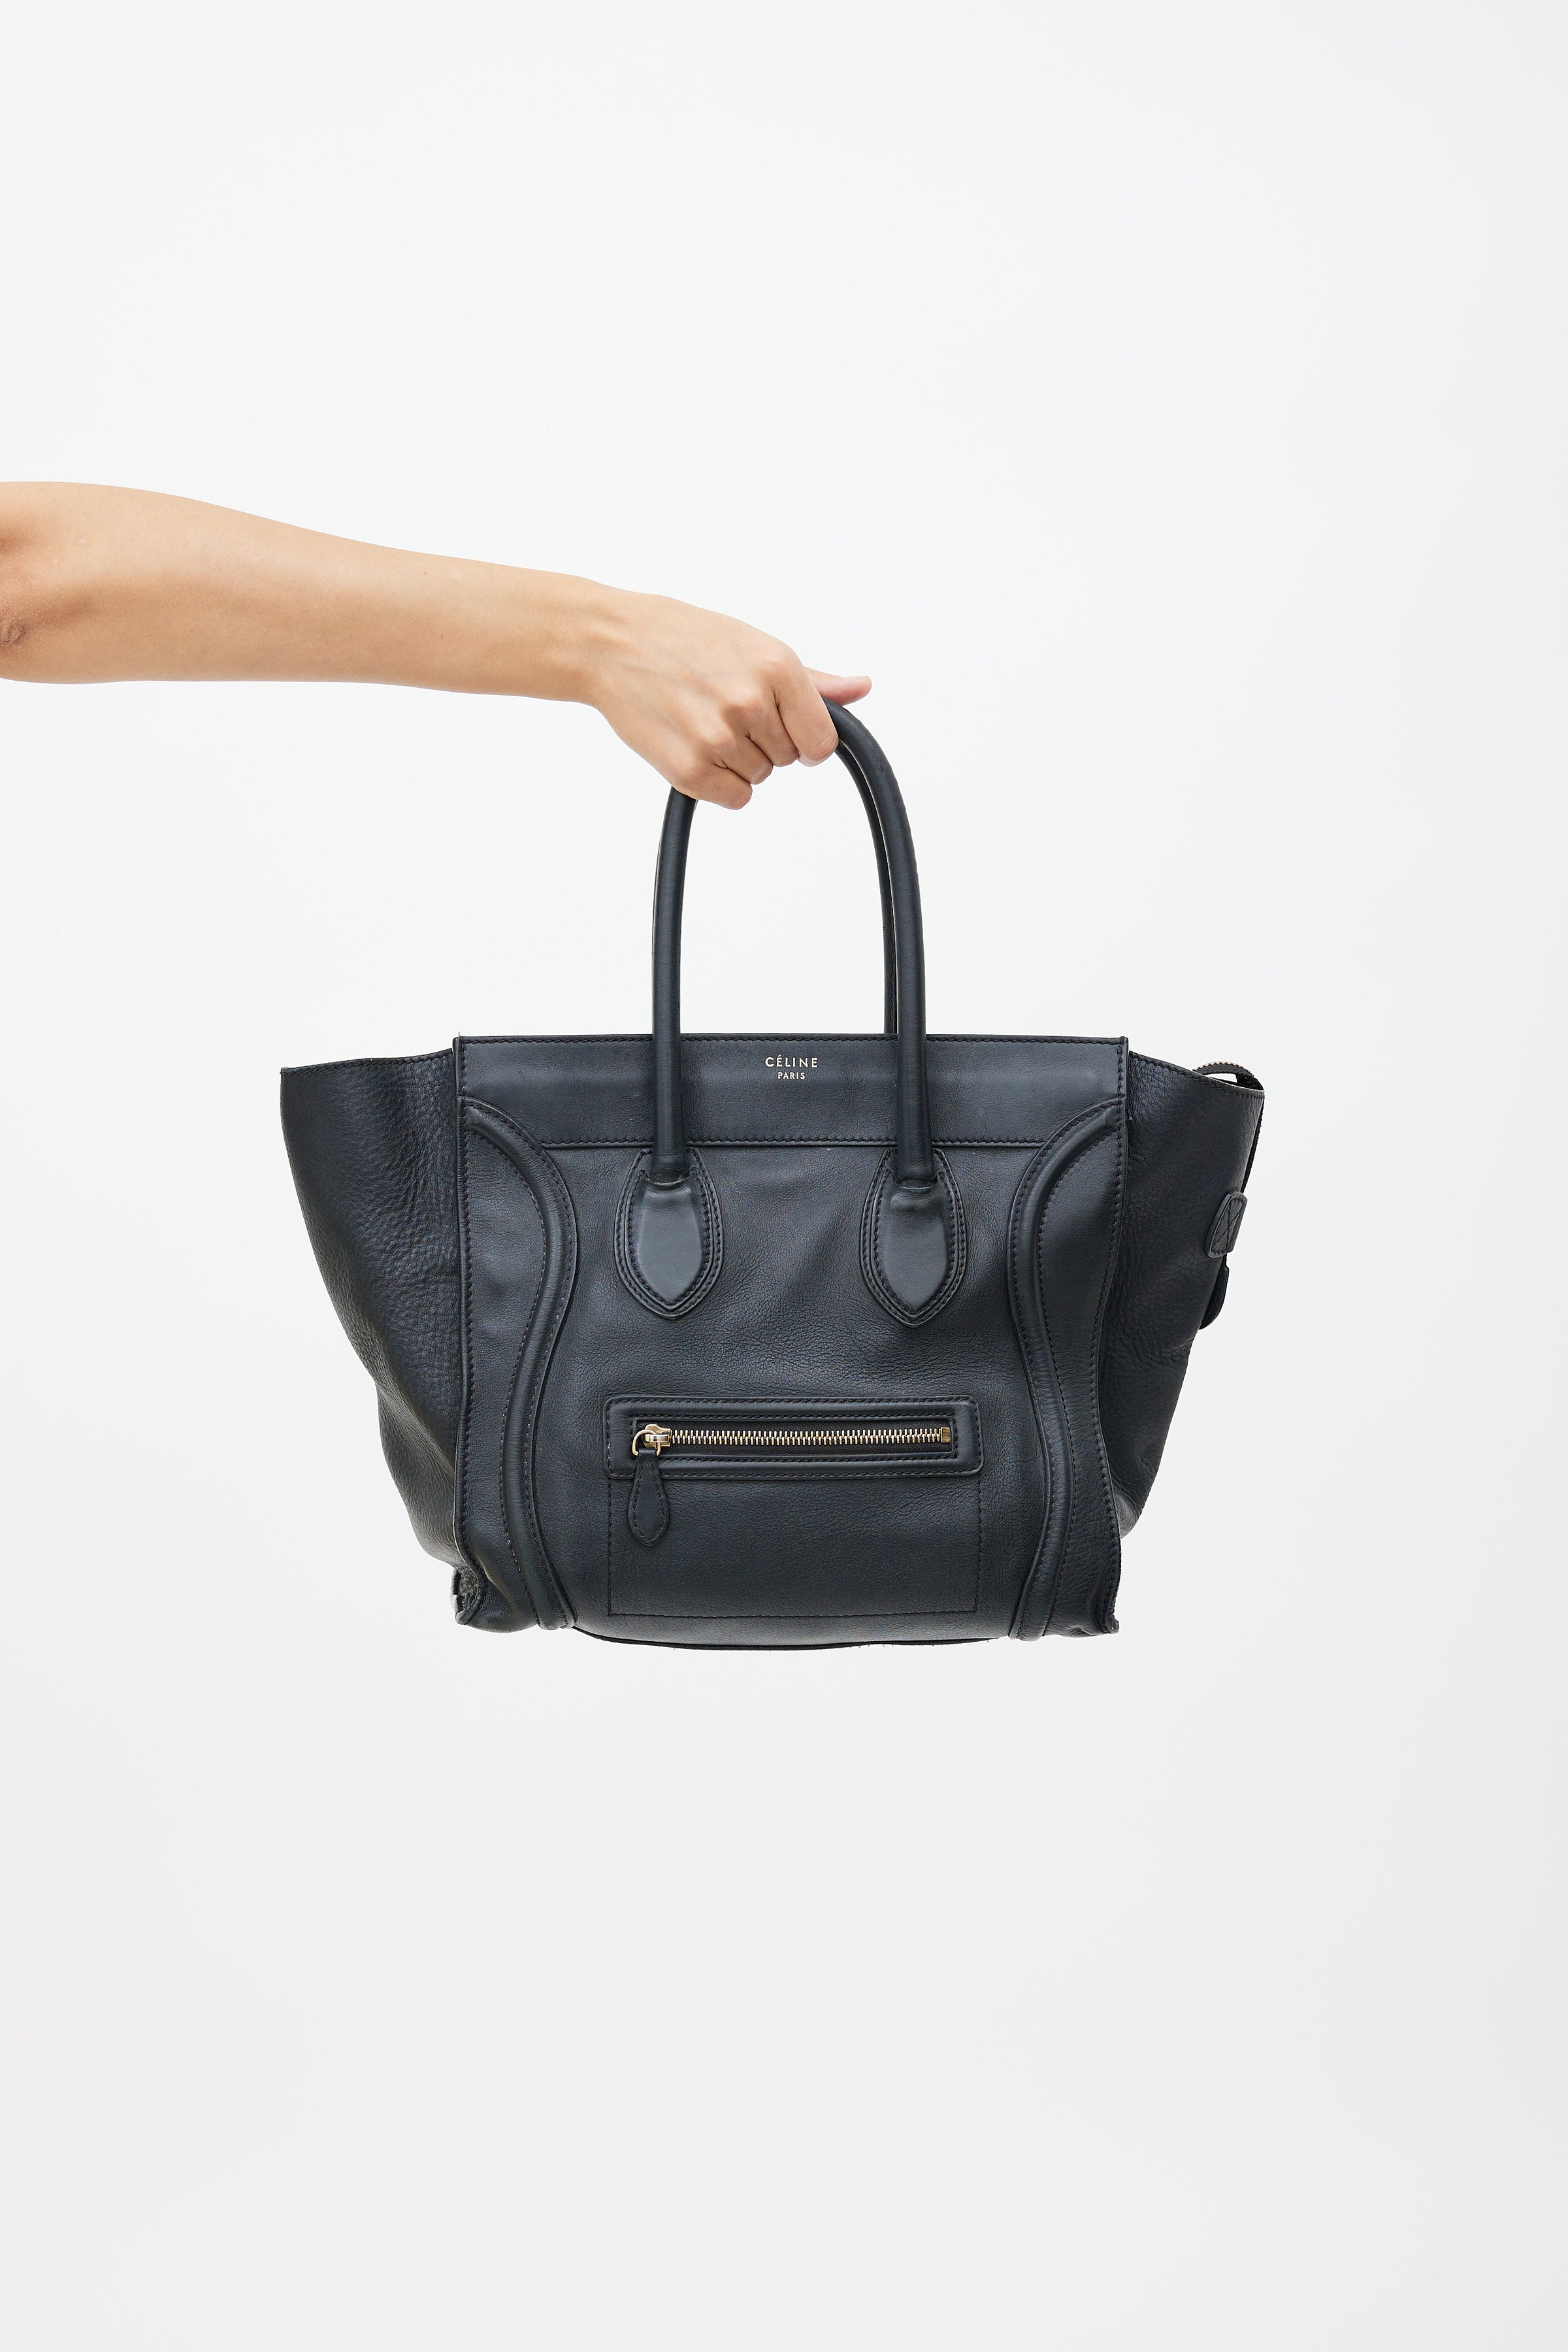 CELINE Luggage Mini Shopper Bag - A Retro Tale